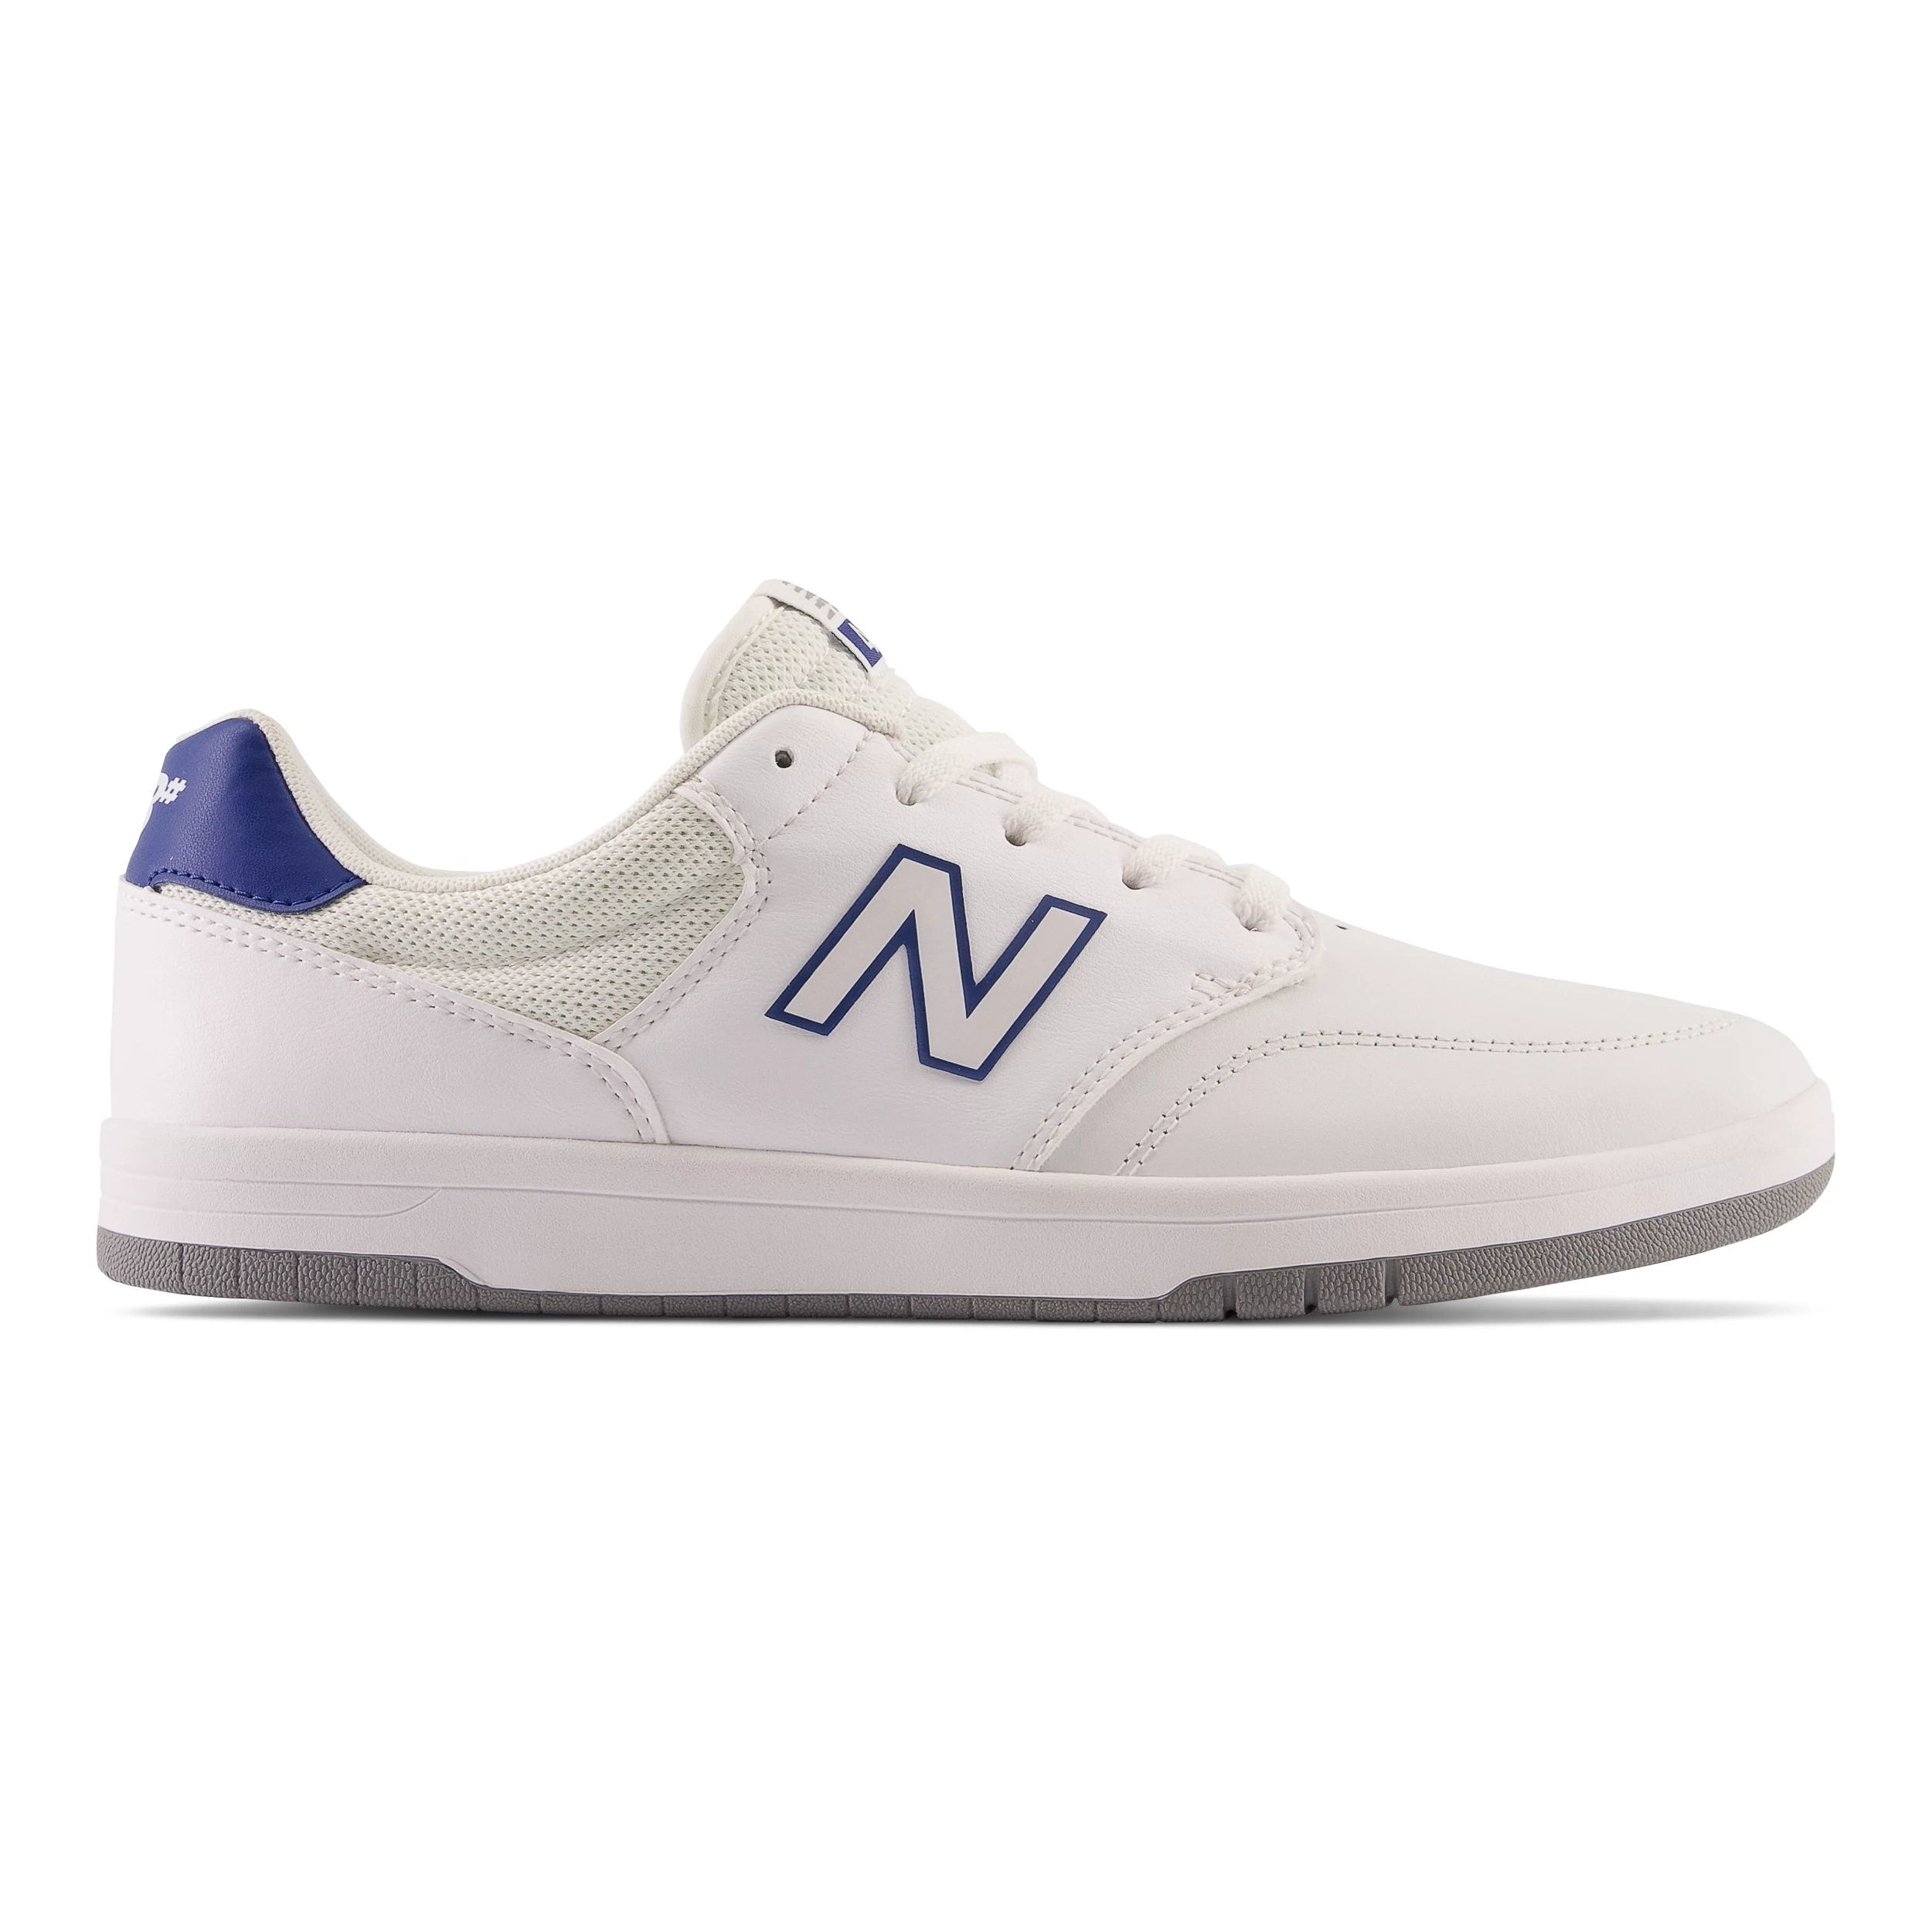 White/Blue NM425 NB Numeric Skate Shoe